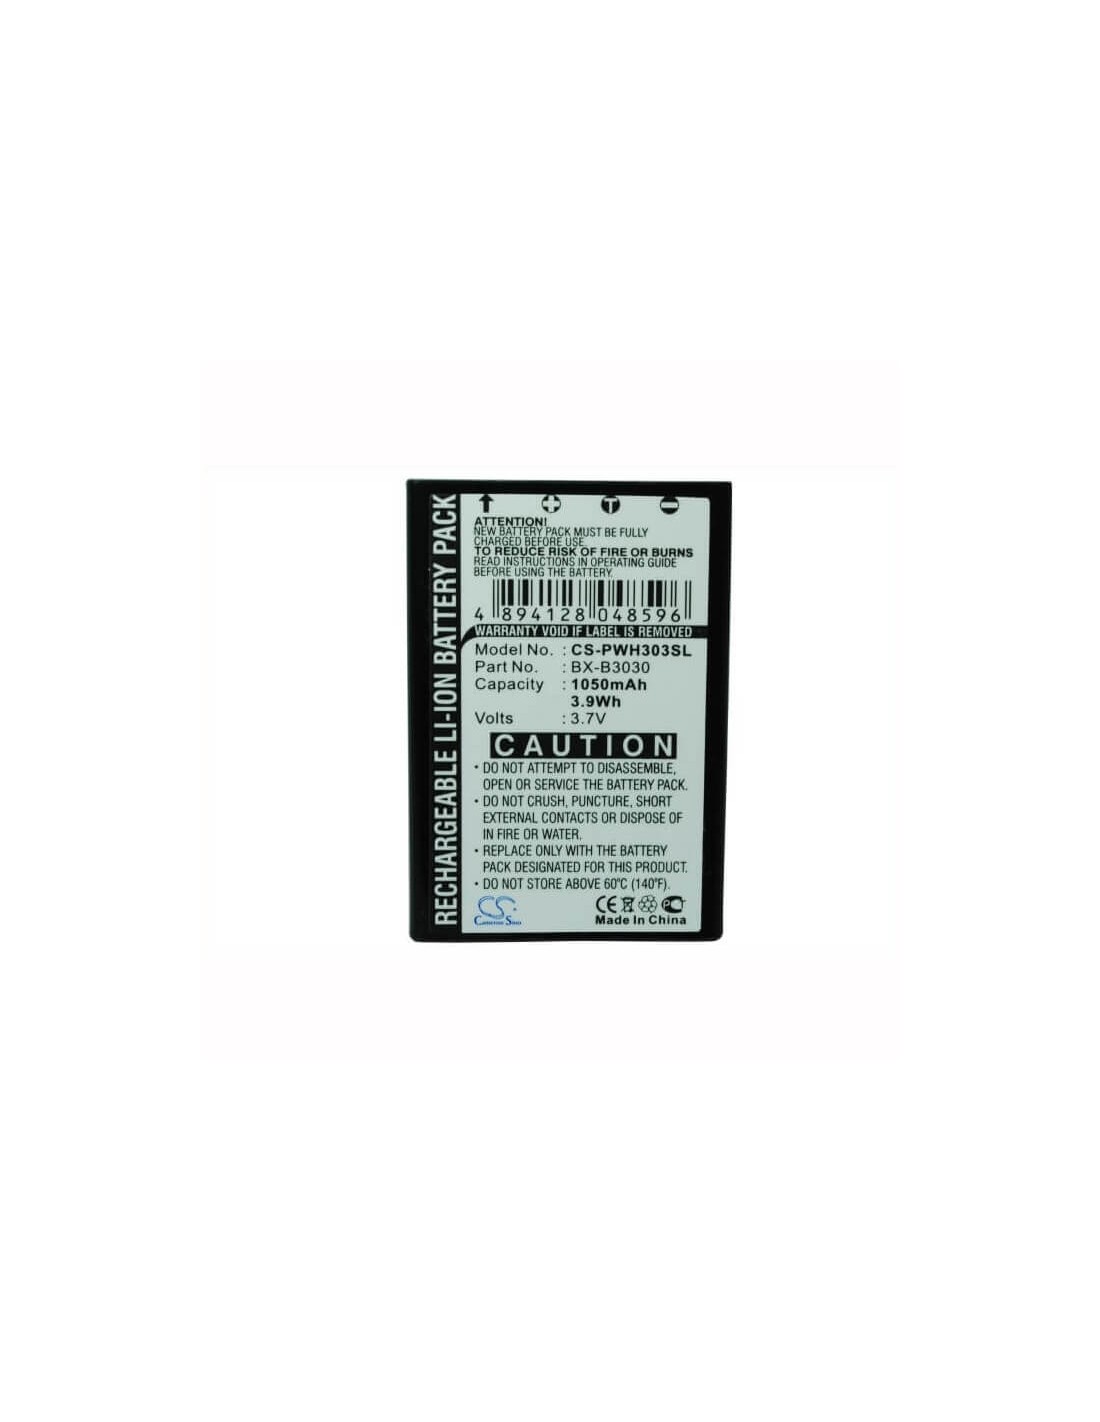 Battery for Panasonic Wx-h3030, Wx-t3020, Attune 3020 3.7V, 1050mAh - 3.89Wh